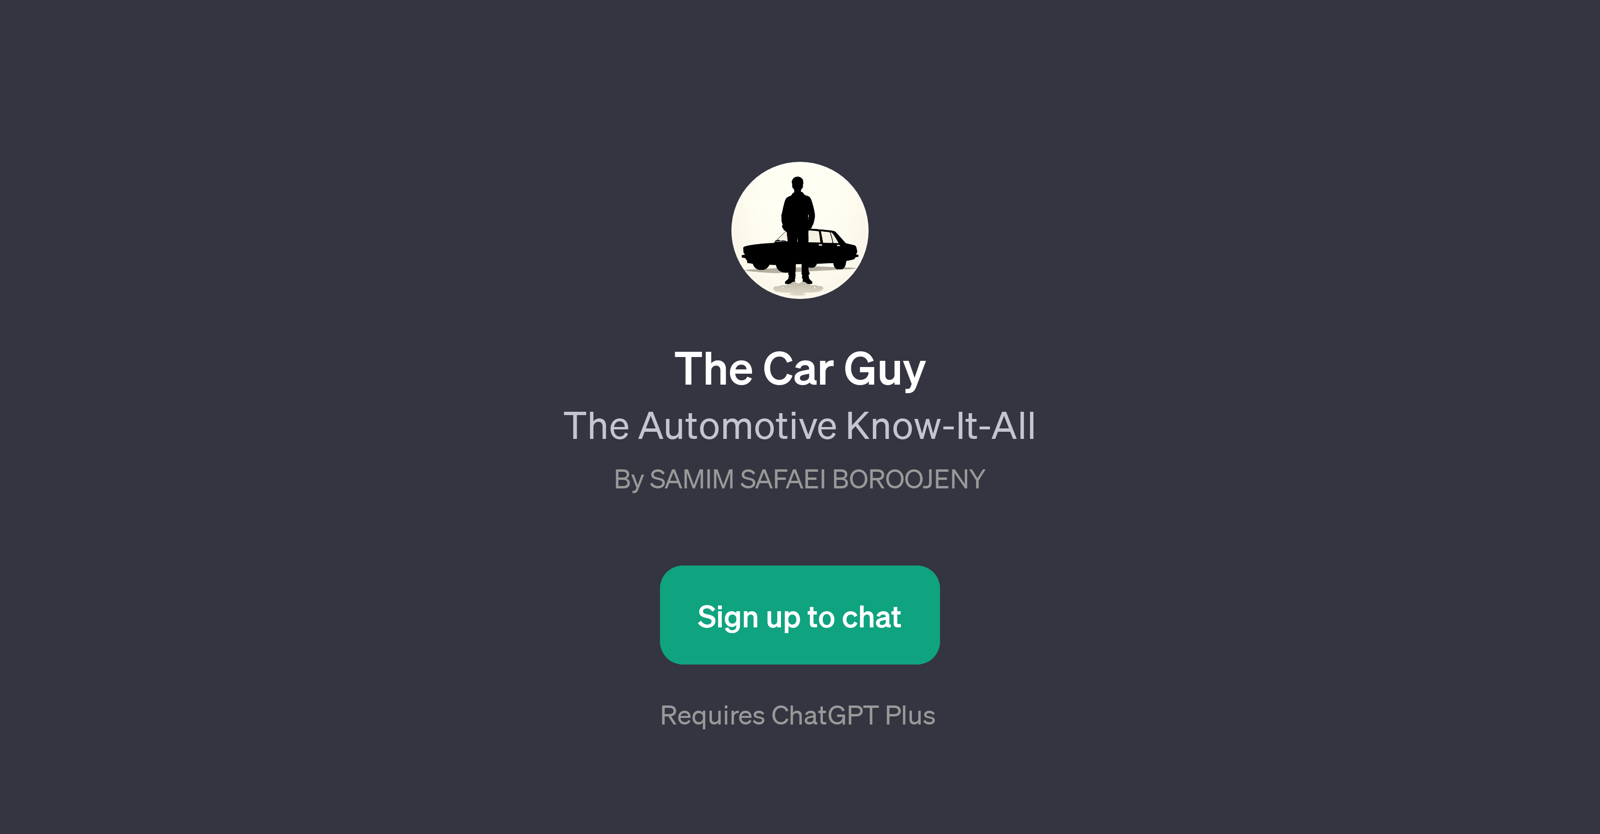 The Car Guy website